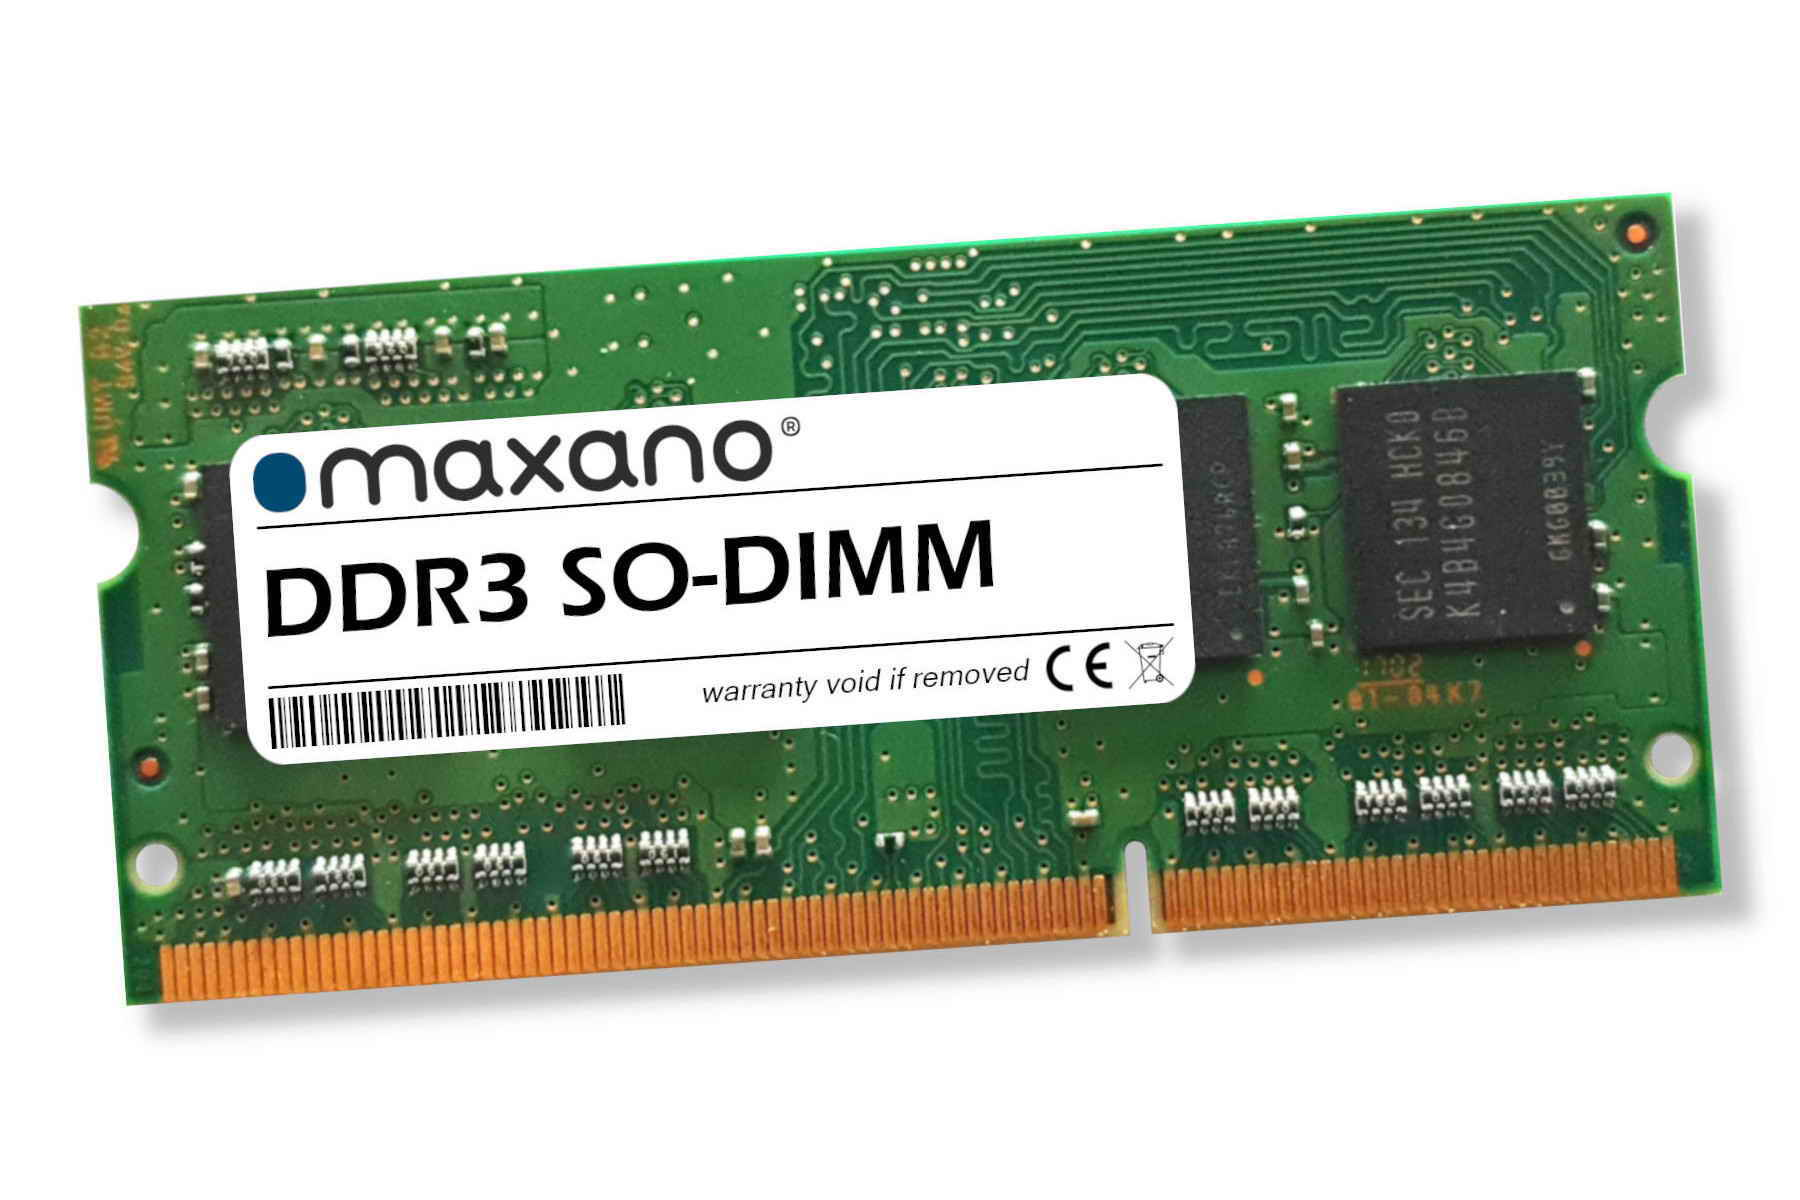 SDRAM 4GB AS6210T GB SO-DIMM) MAXANO für Arbeitsspeicher Asustor 4 (PC3-12800 RAM